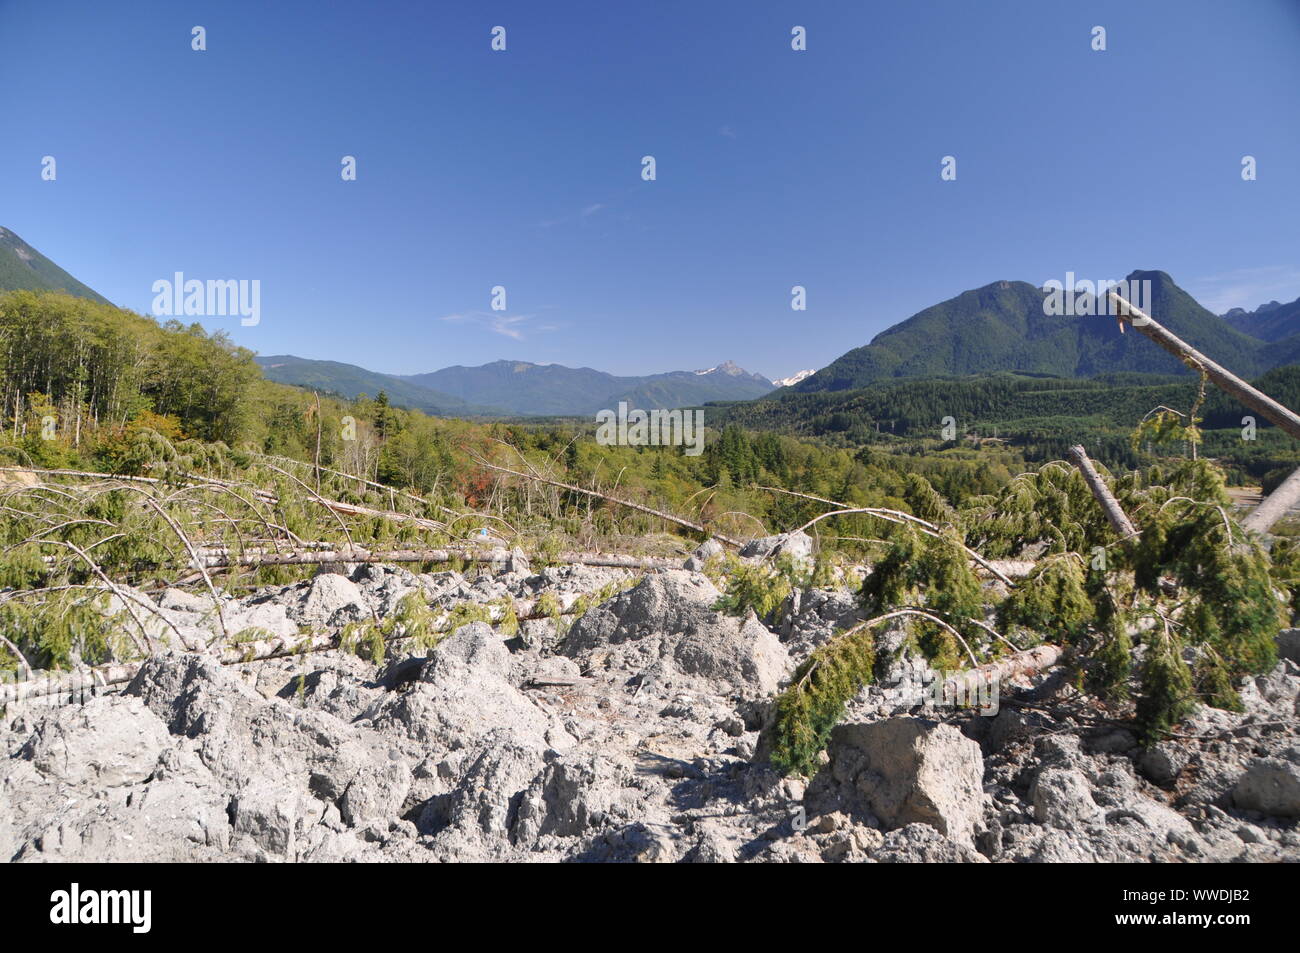 2014 fatal Oso Landslide deposit, with Glacier Peak in the background, Oso Landslide, North Fork Stillaguamish River Valley, Snohomish County, WA, USA Stock Photo